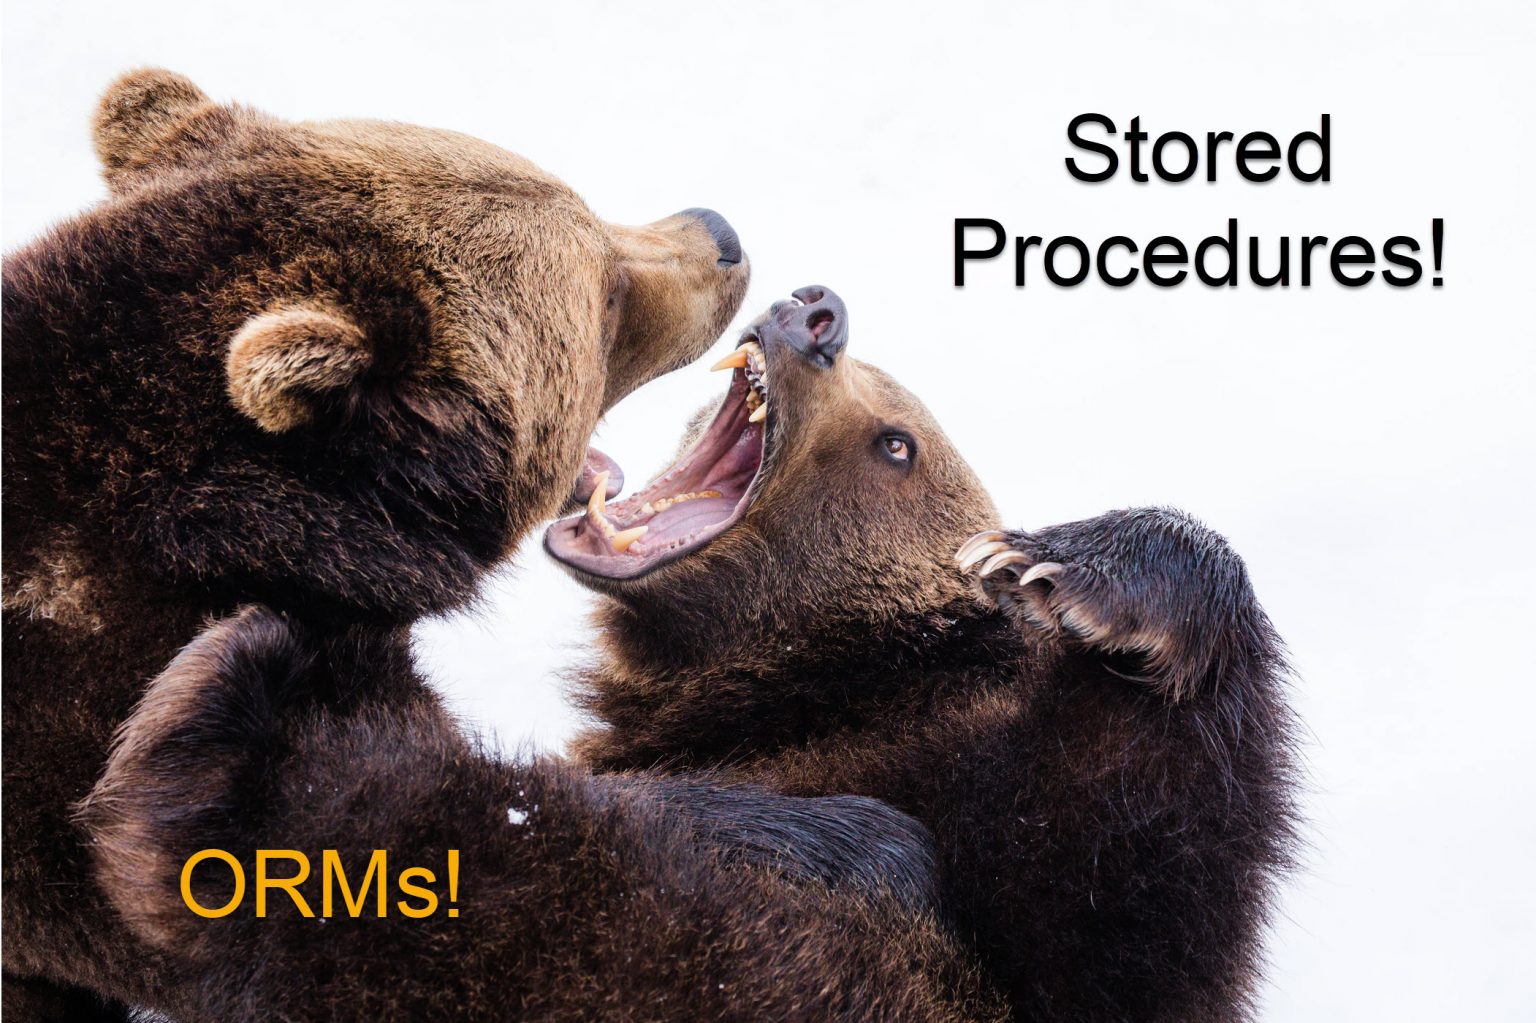 ORMS vs. Stored Procedures